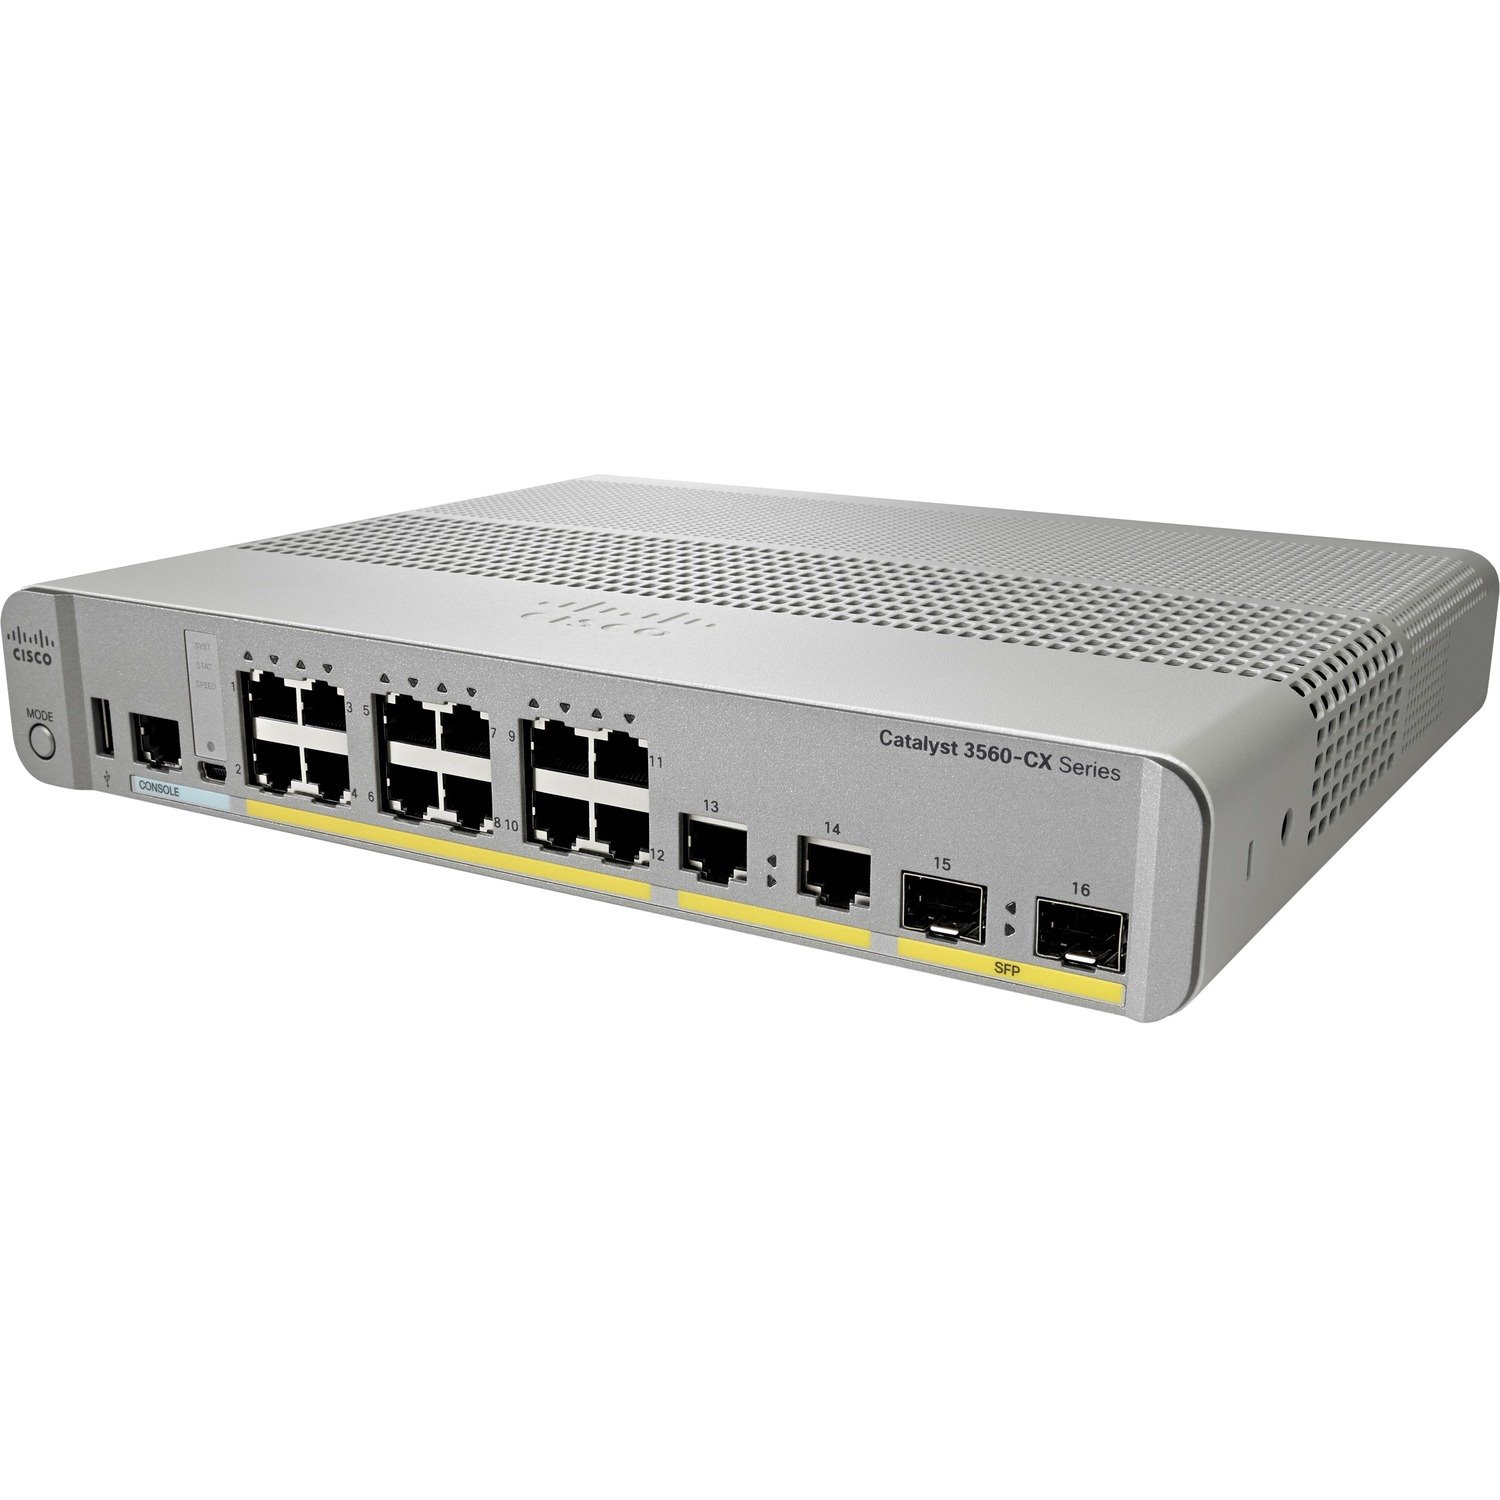 Cisco Catalyst 2960-CX 2960CX-8TC-L 10 Ports Manageable Layer 3 Switch - Gigabit Ethernet - 10/100/1000Base-T, 1000Base-X - Refurbished